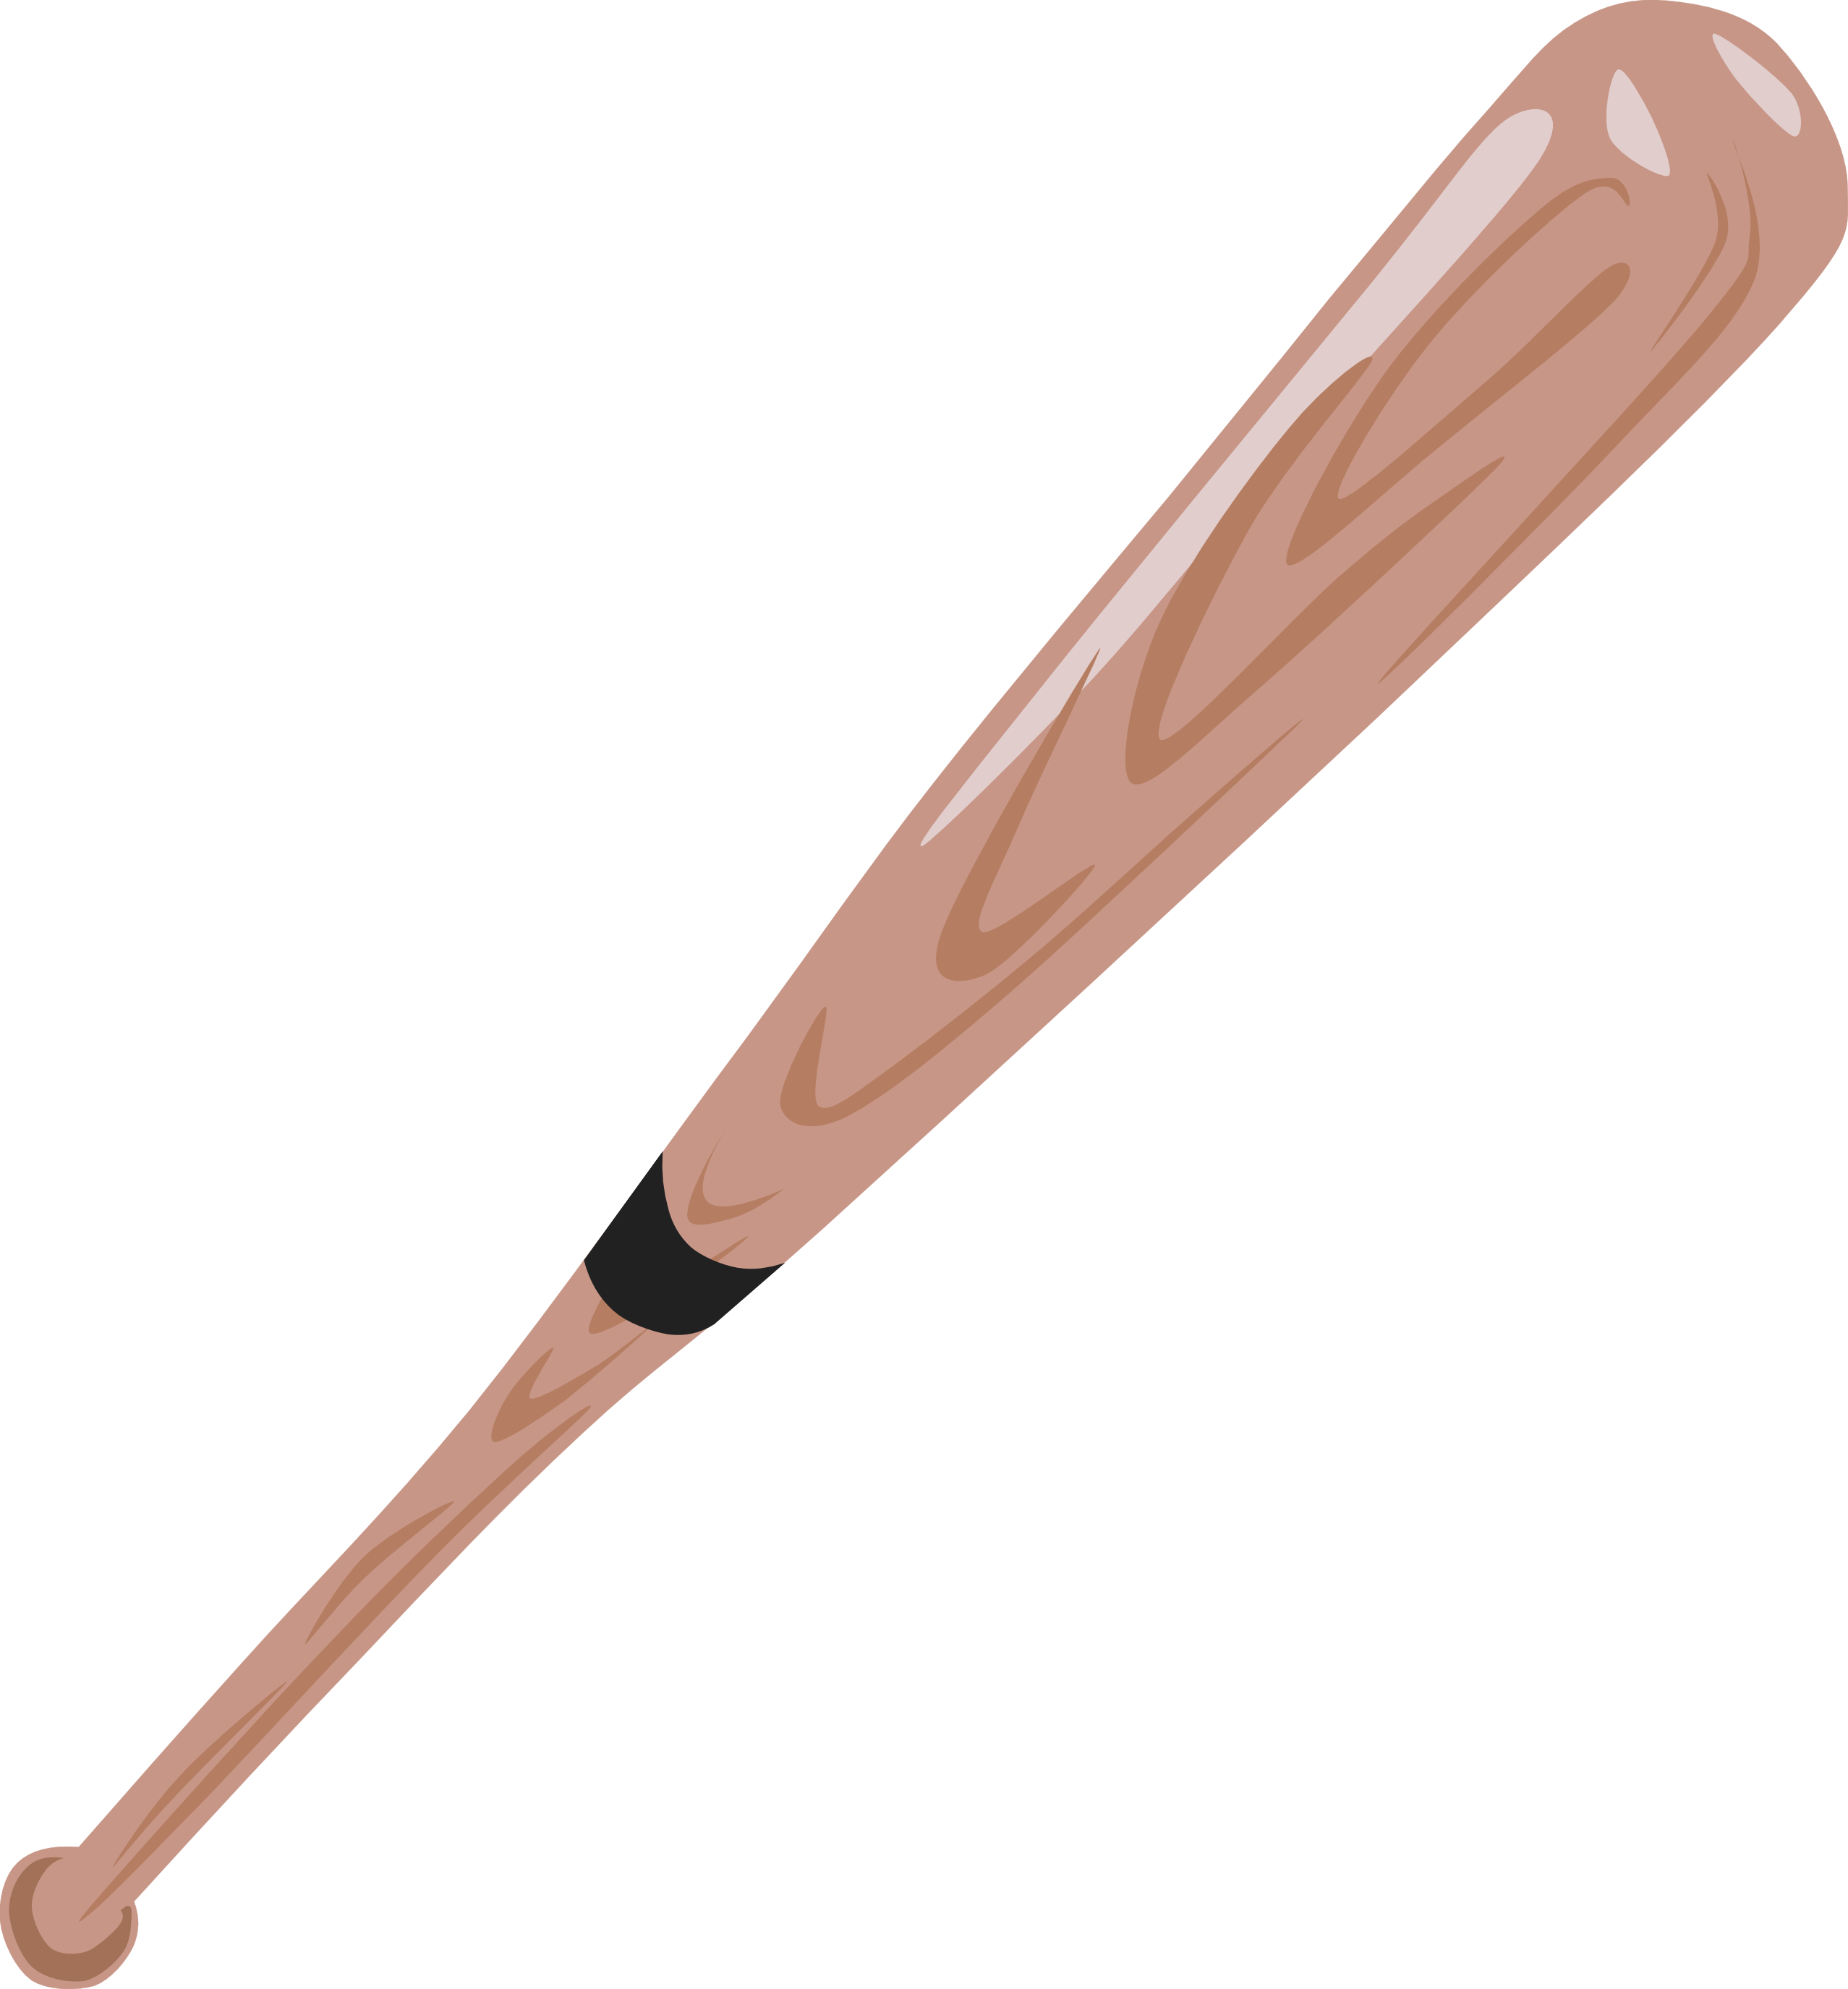 Crossed baseball bat clipart  - Baseball Bats Clipart